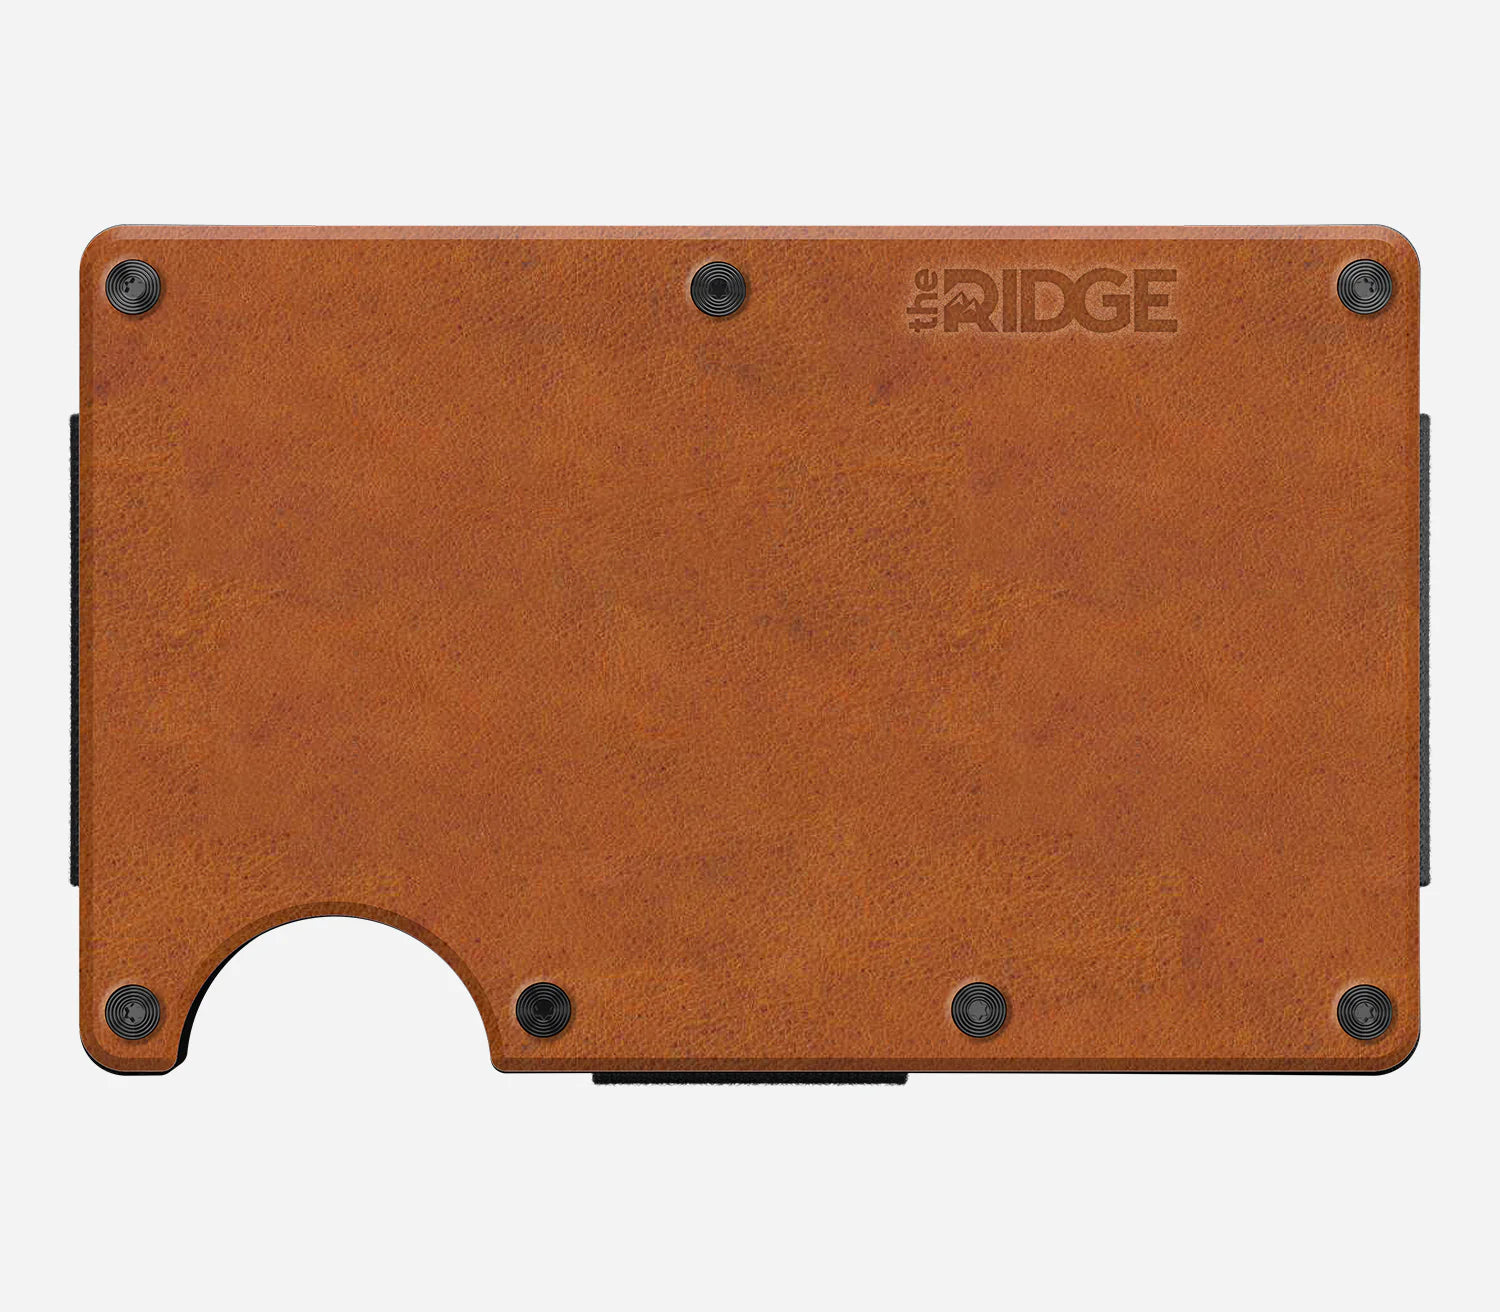 The Ridge Wallet - Leather Cash Strap - Tobacco Brown